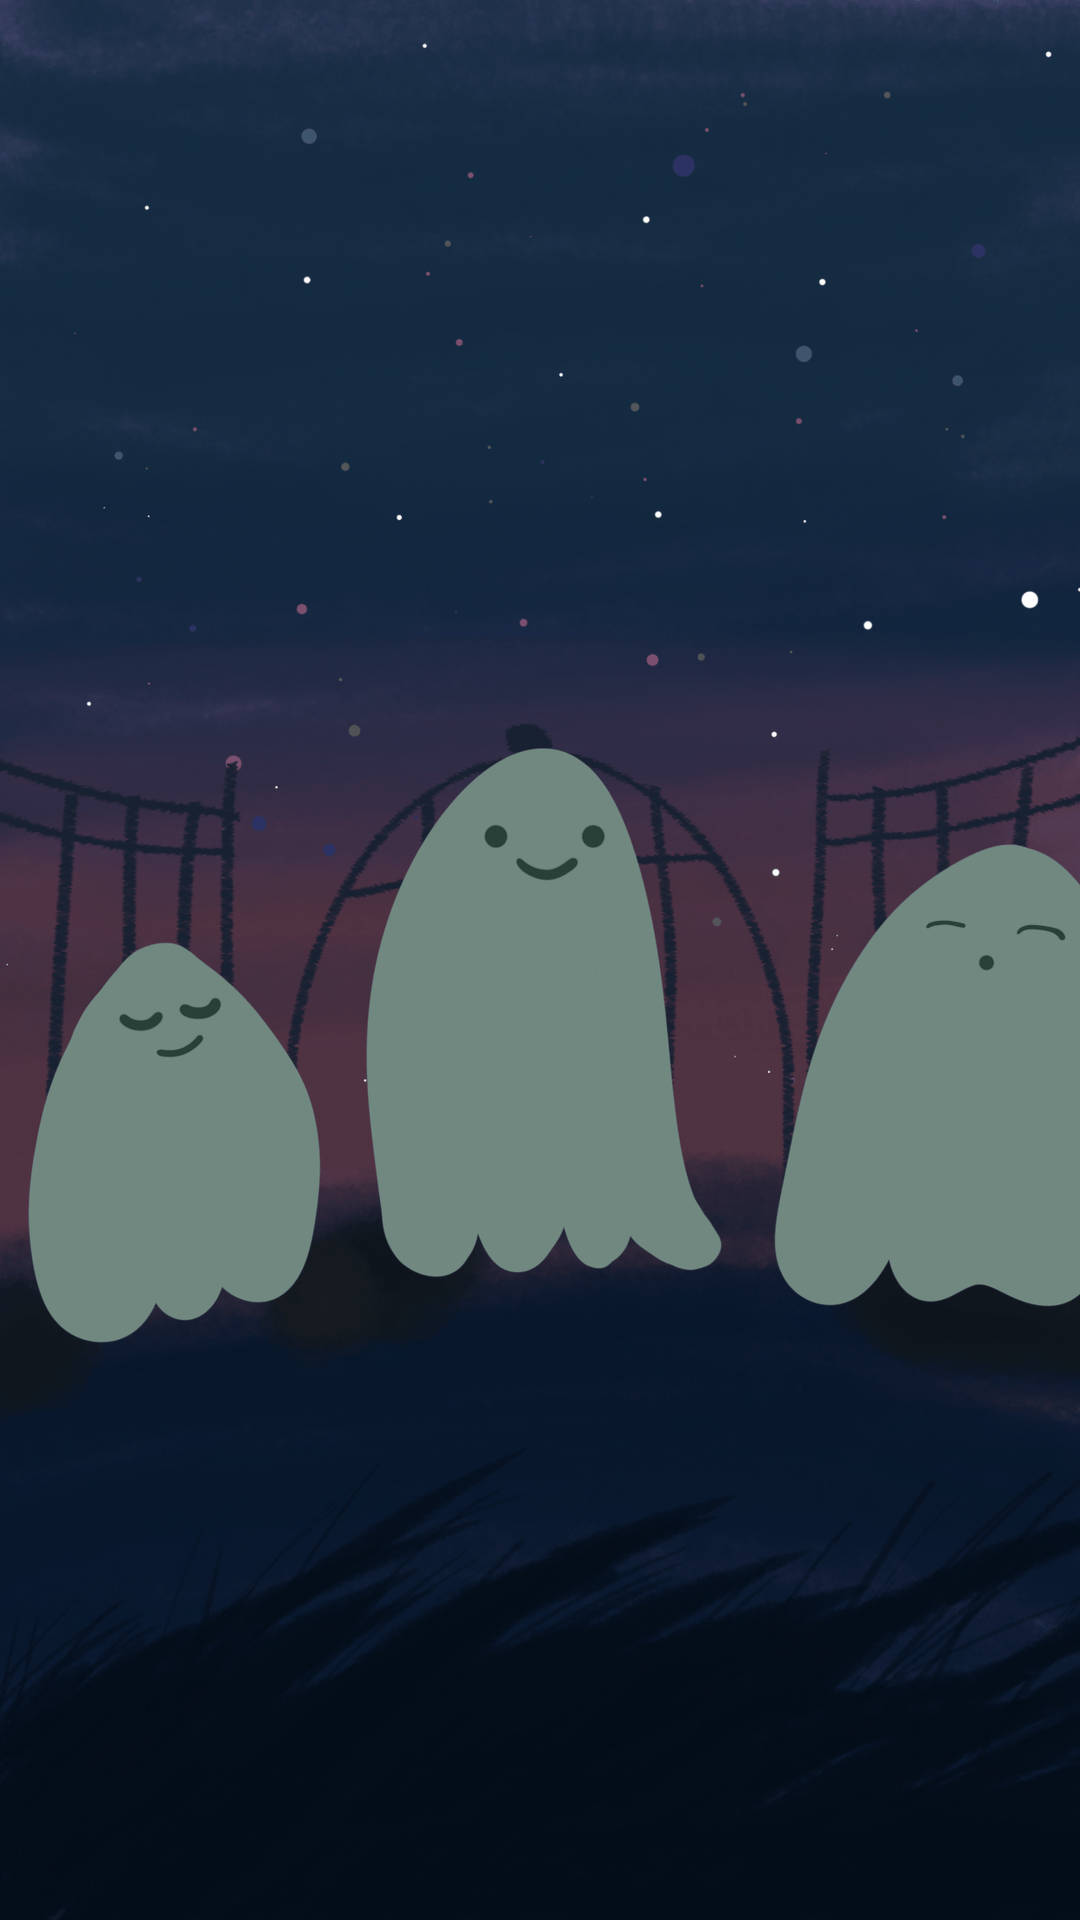 Three Ghost Aesthetic At Night